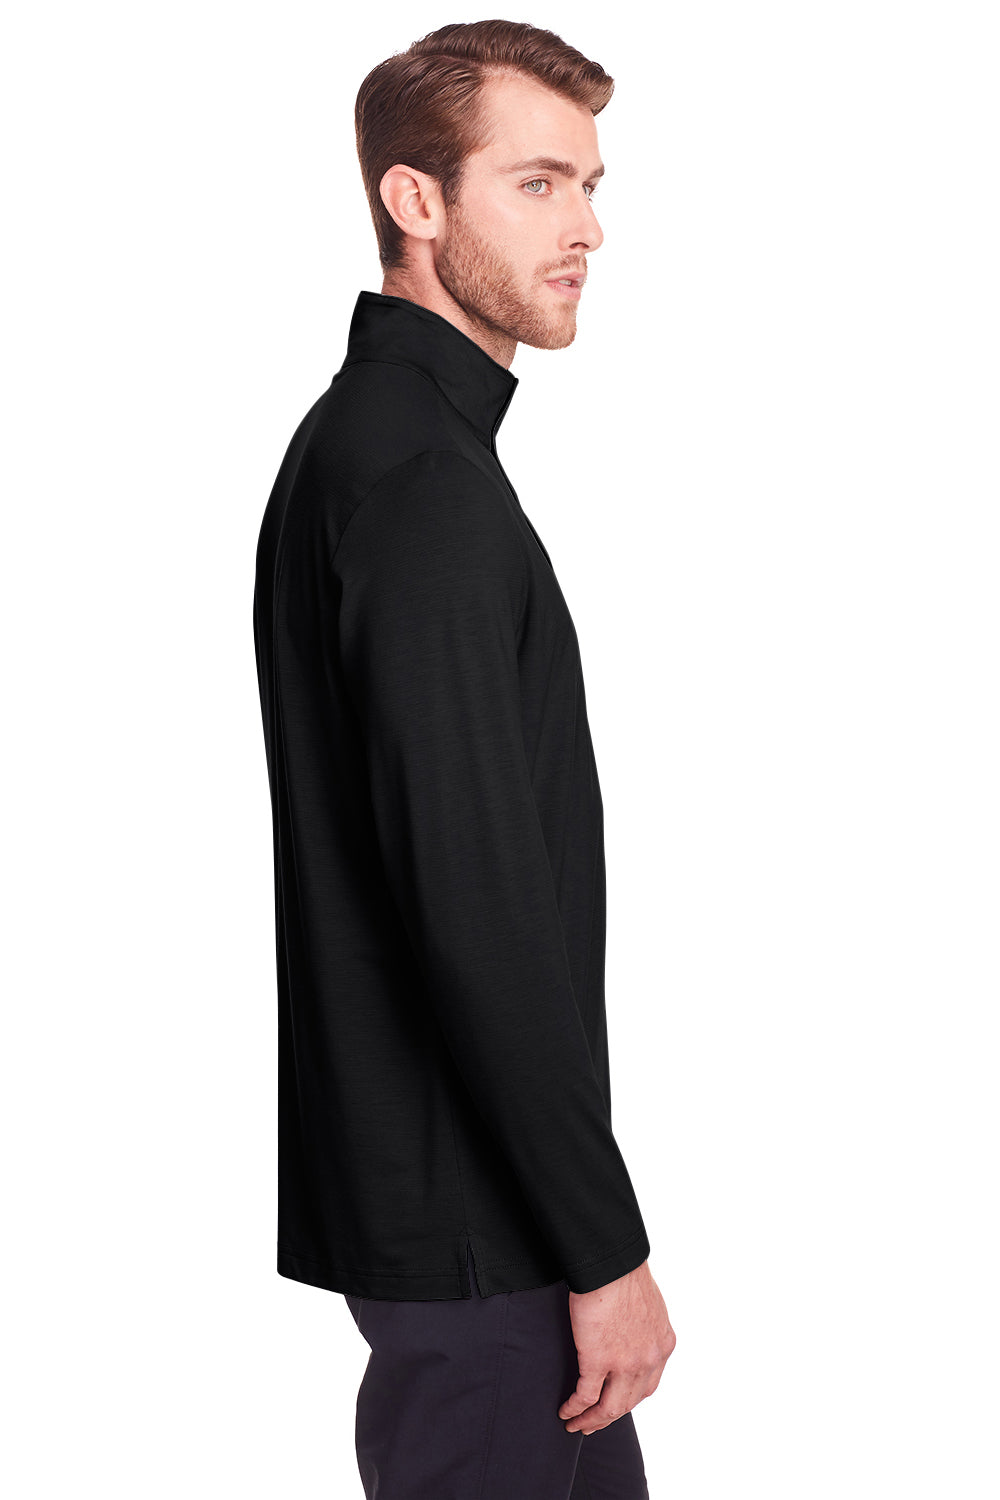 North End NE400 Mens Jaq Performance Moisture Wicking Long Sleeve Polo Shirt Black Side